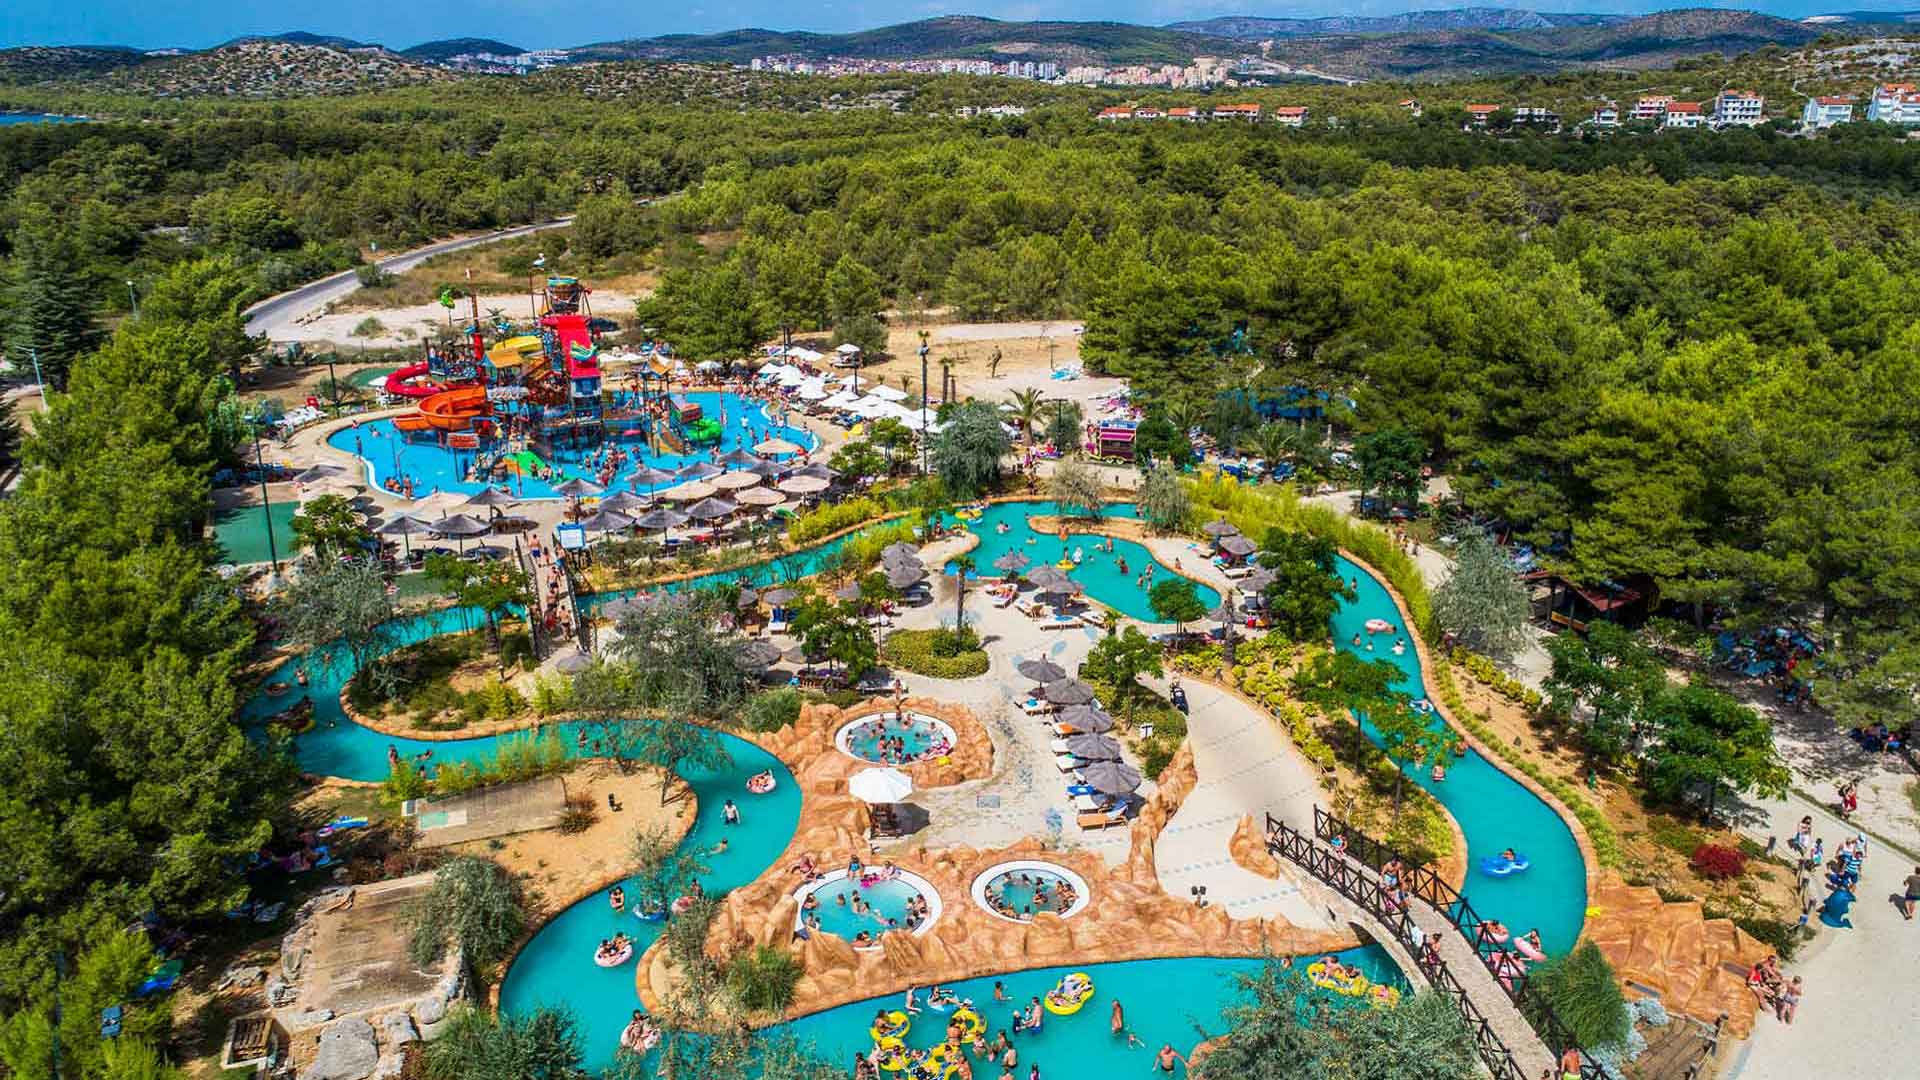 Aquapark Dalmatia - Family Fun at Amadria Park